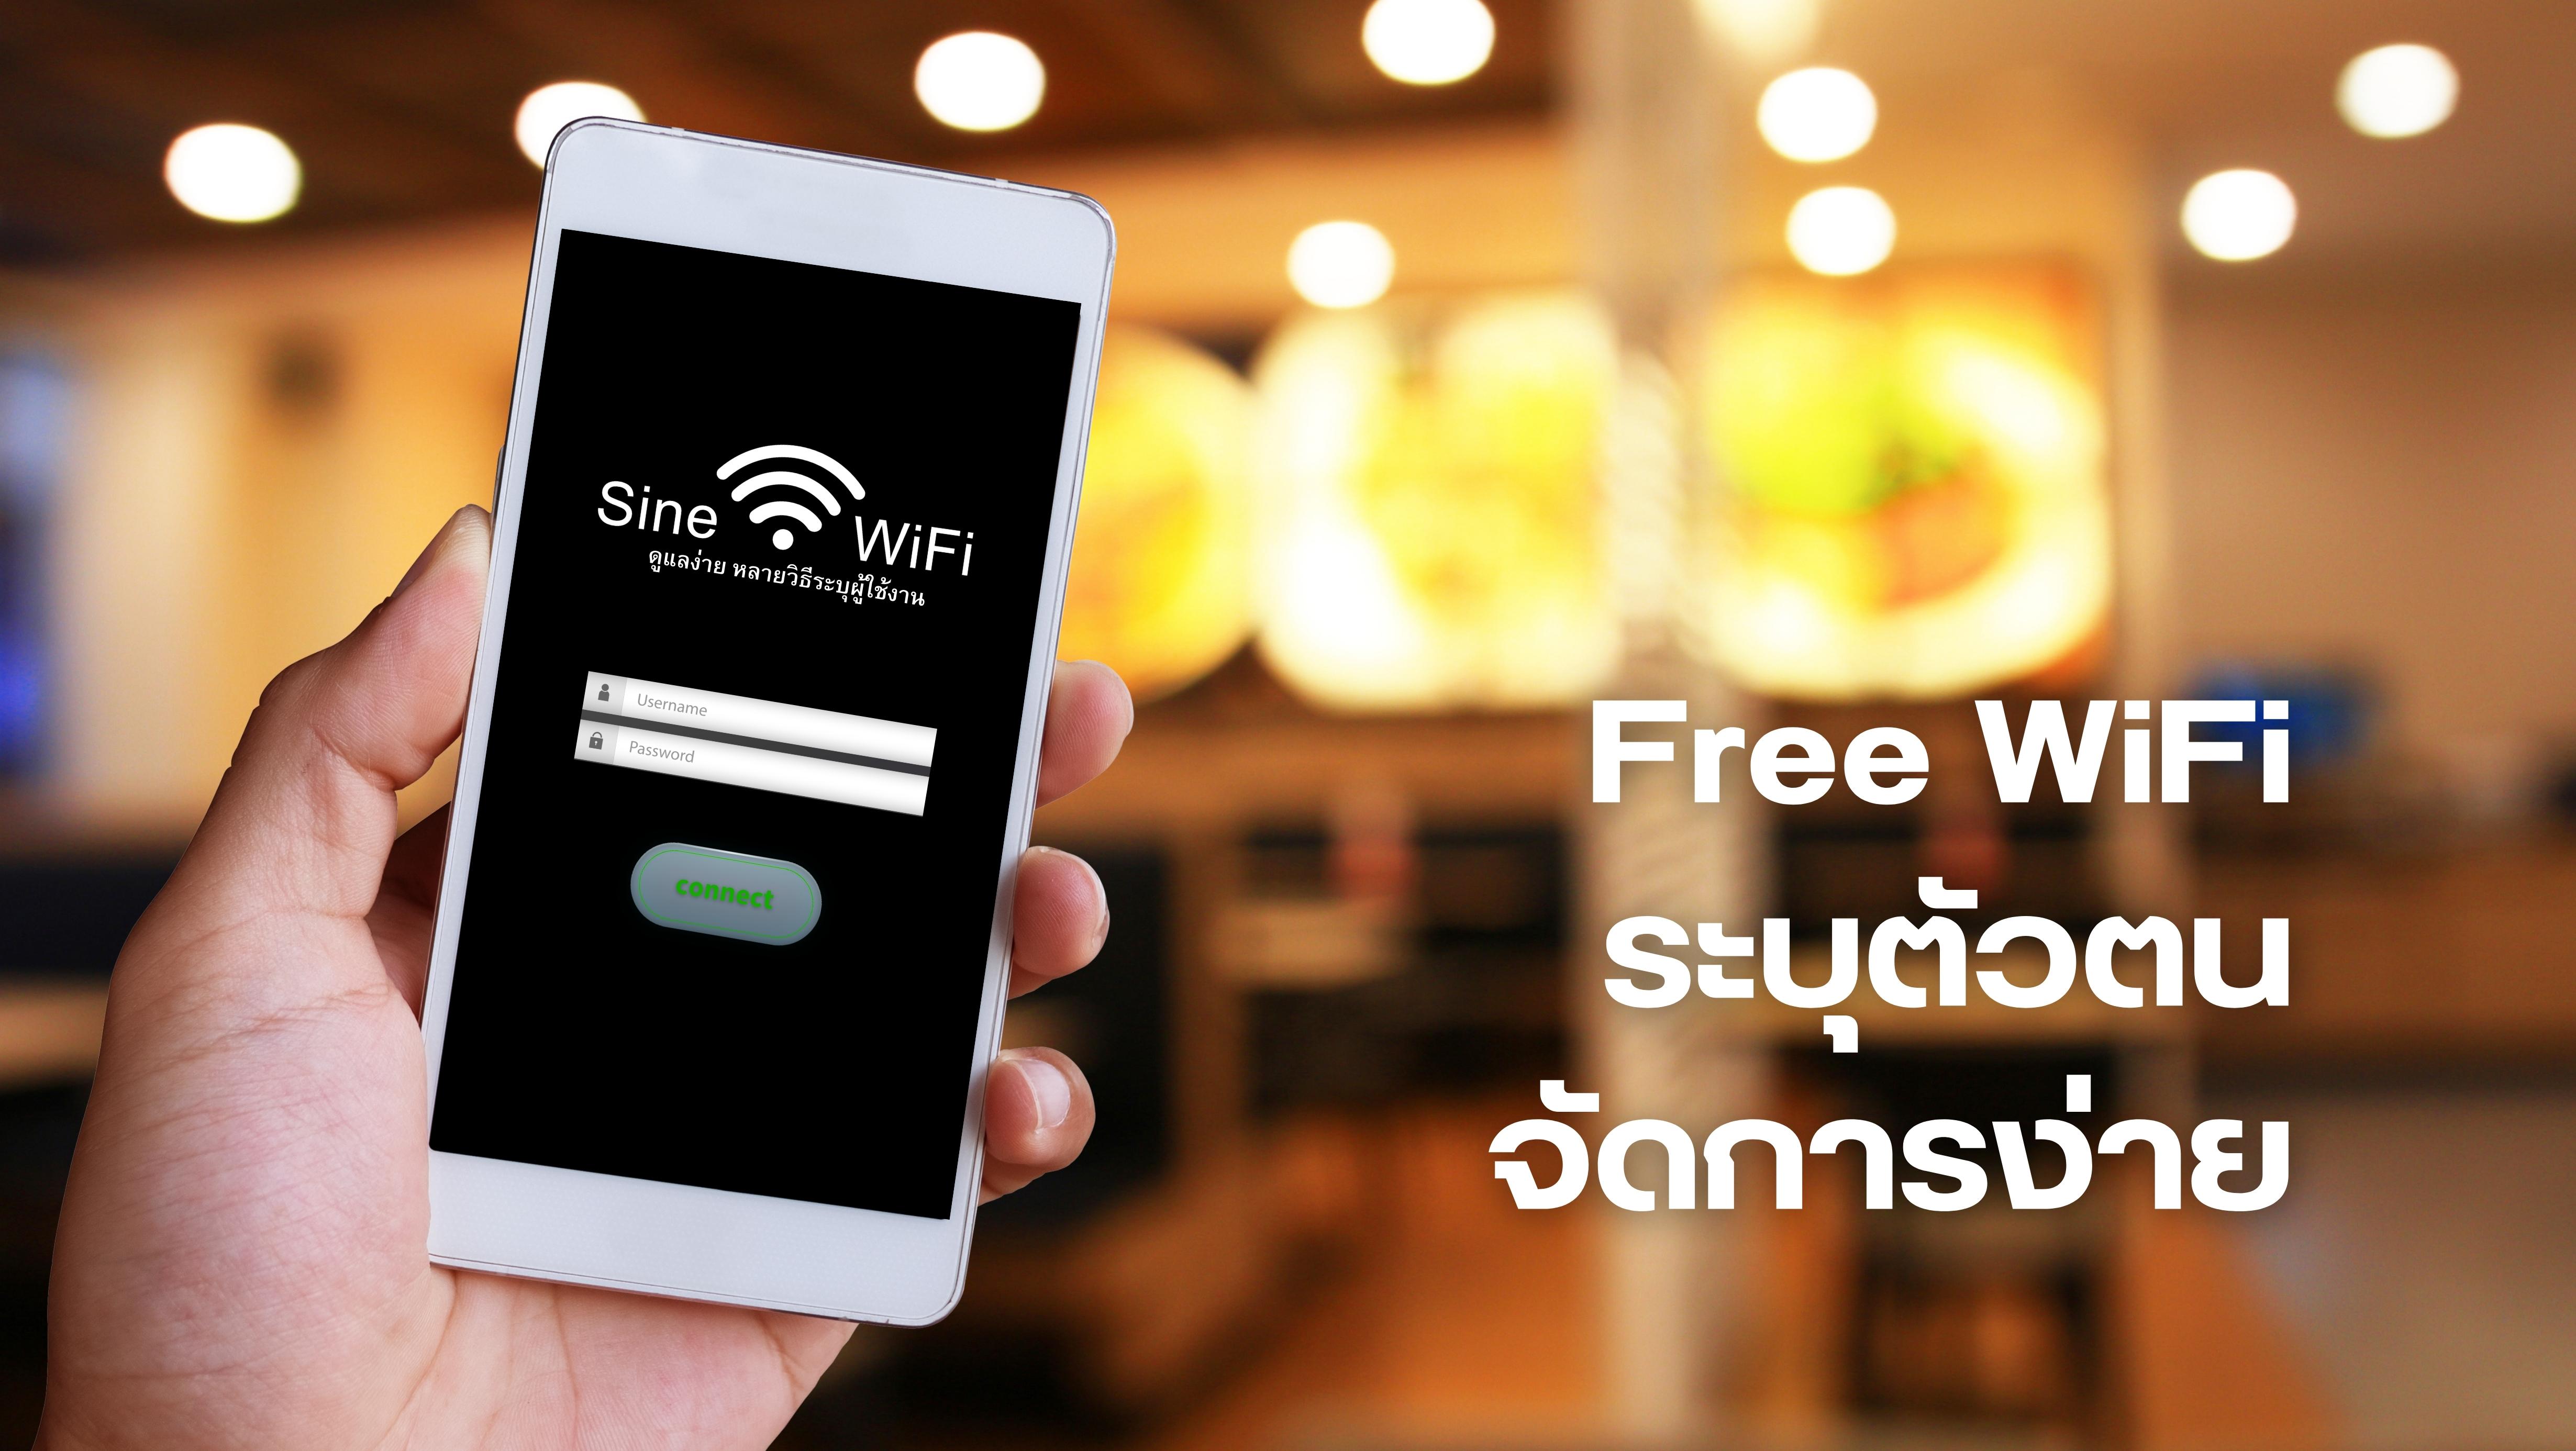 SineWiFi freewifi ระบุตัวตน register ระบบAuthen Authentication wifiโรงแรม wifiหอพัก wifiร้านอาหาร wifiร้านกาแฟ wifiสำหรับลูกค้า